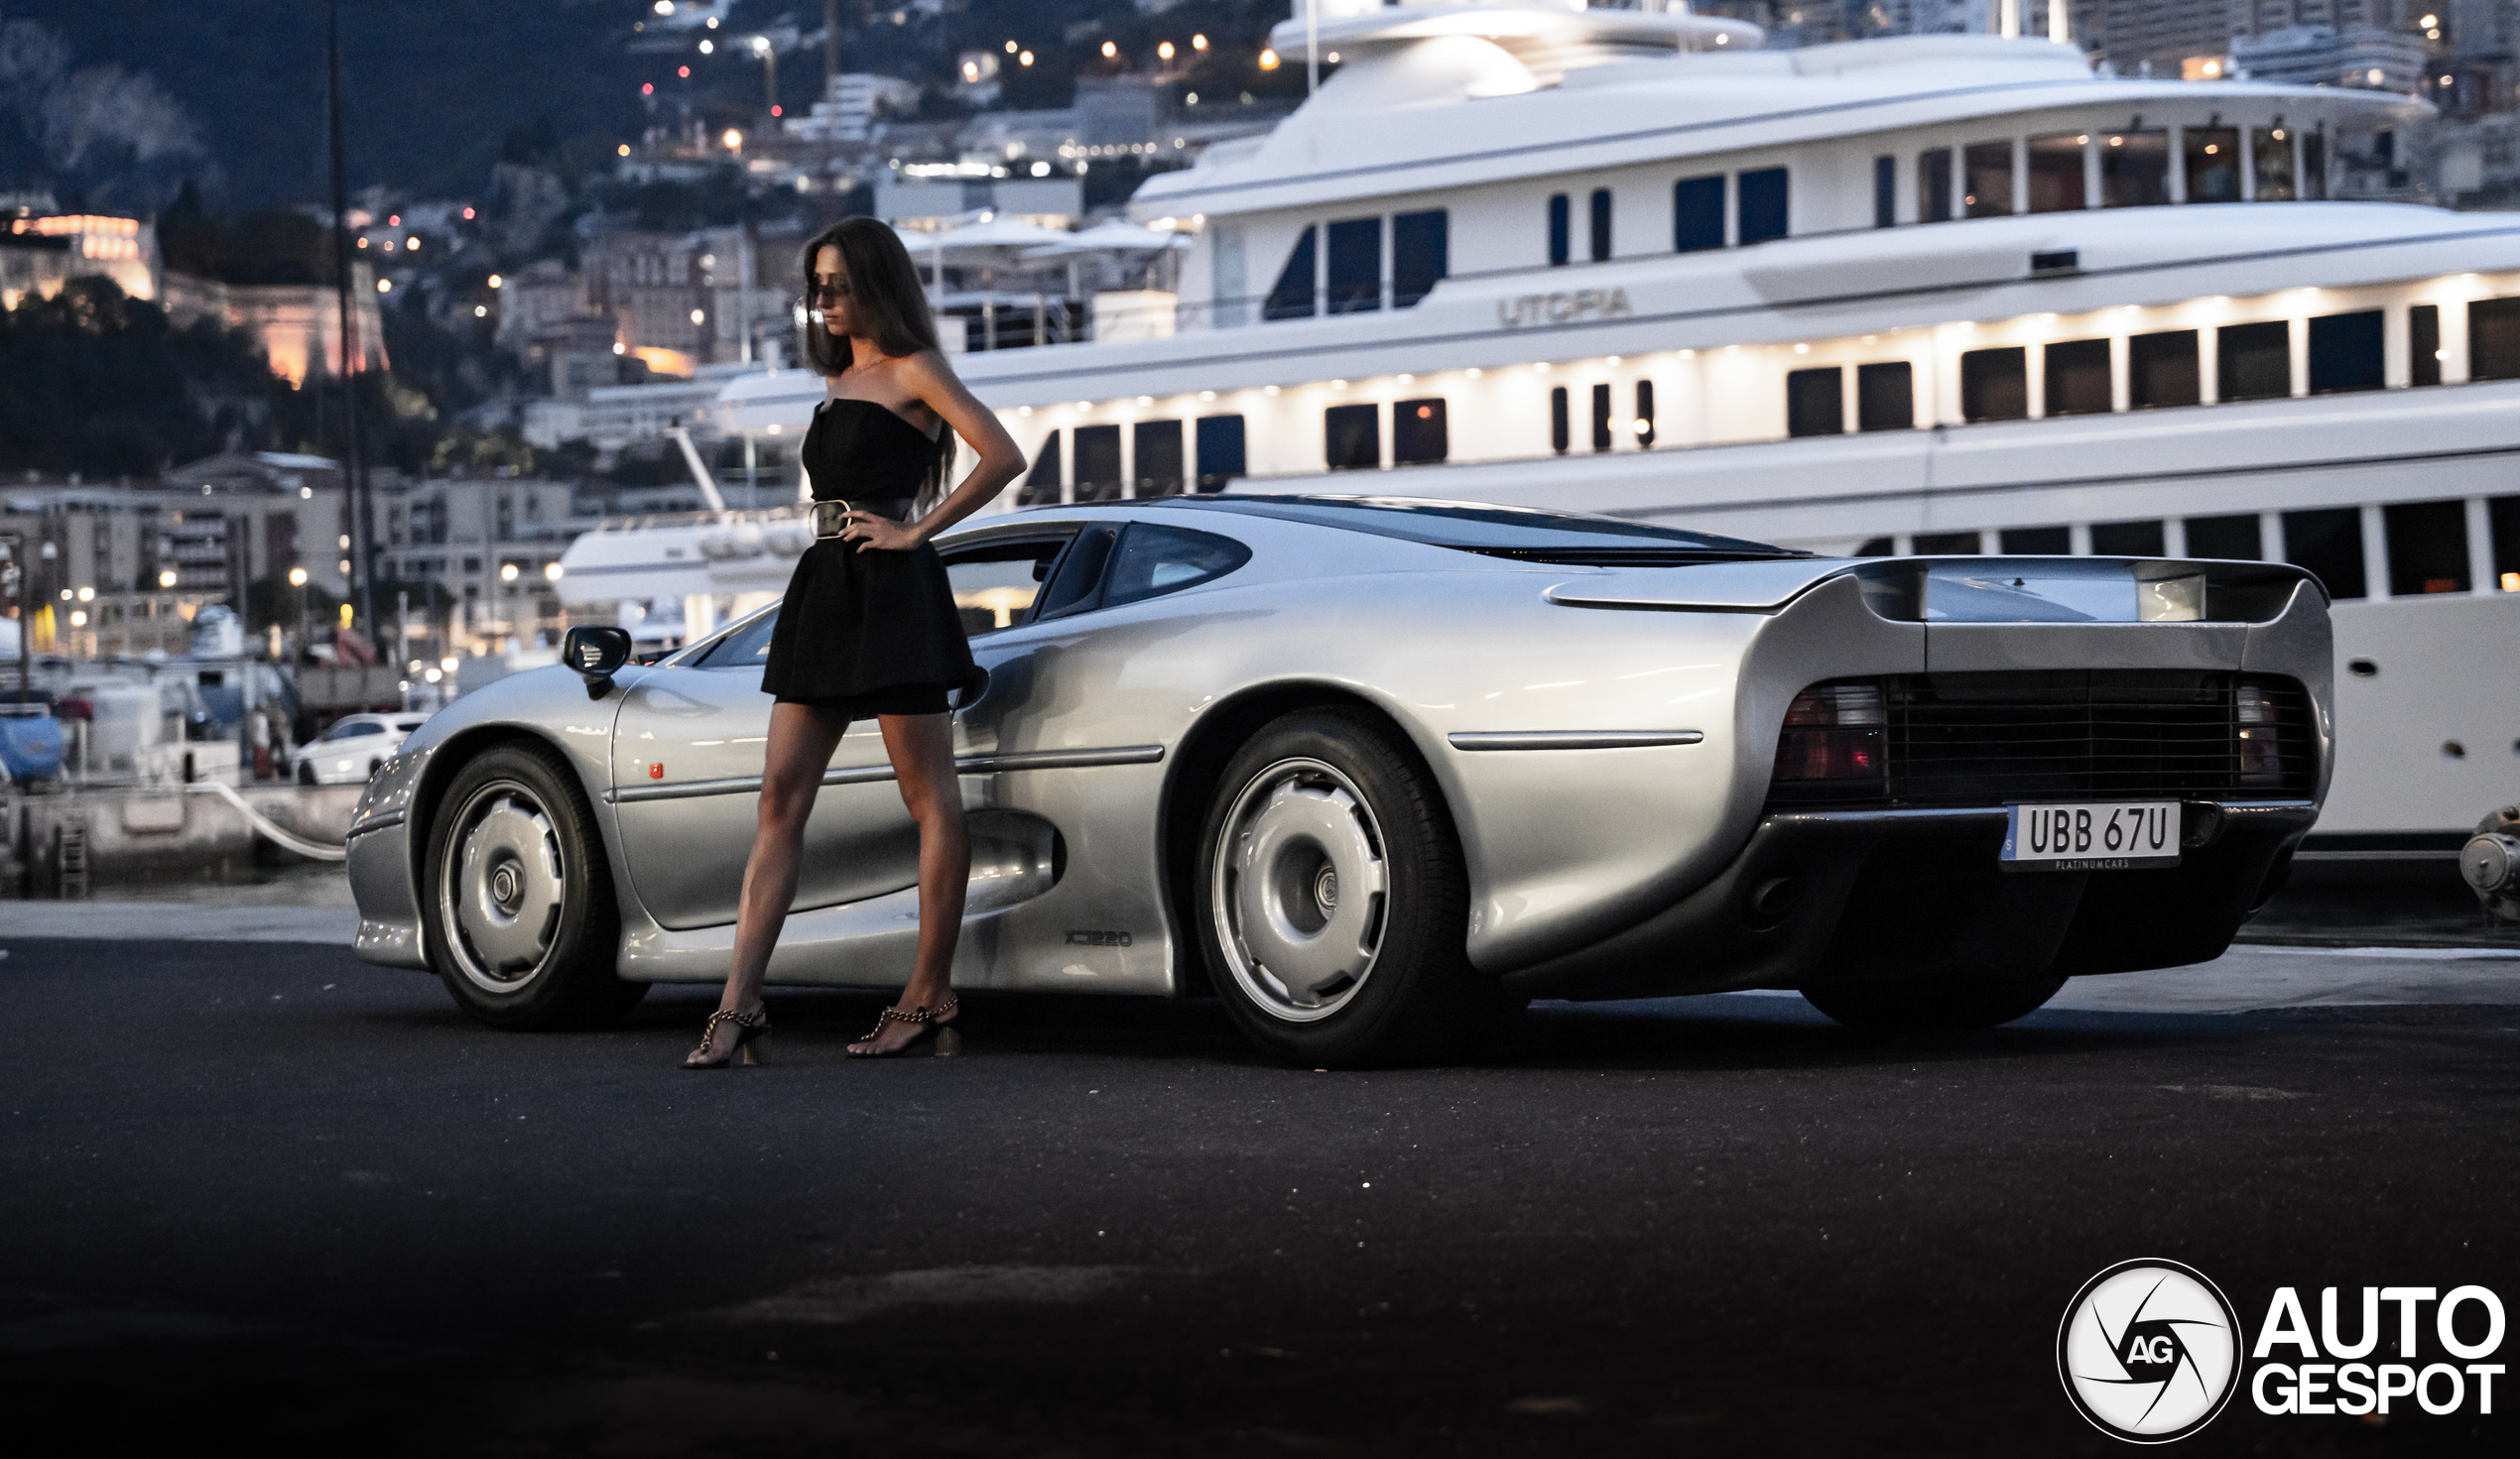 Super sportski automobil Jaguar predstavljen je kao model u luci Monaka.